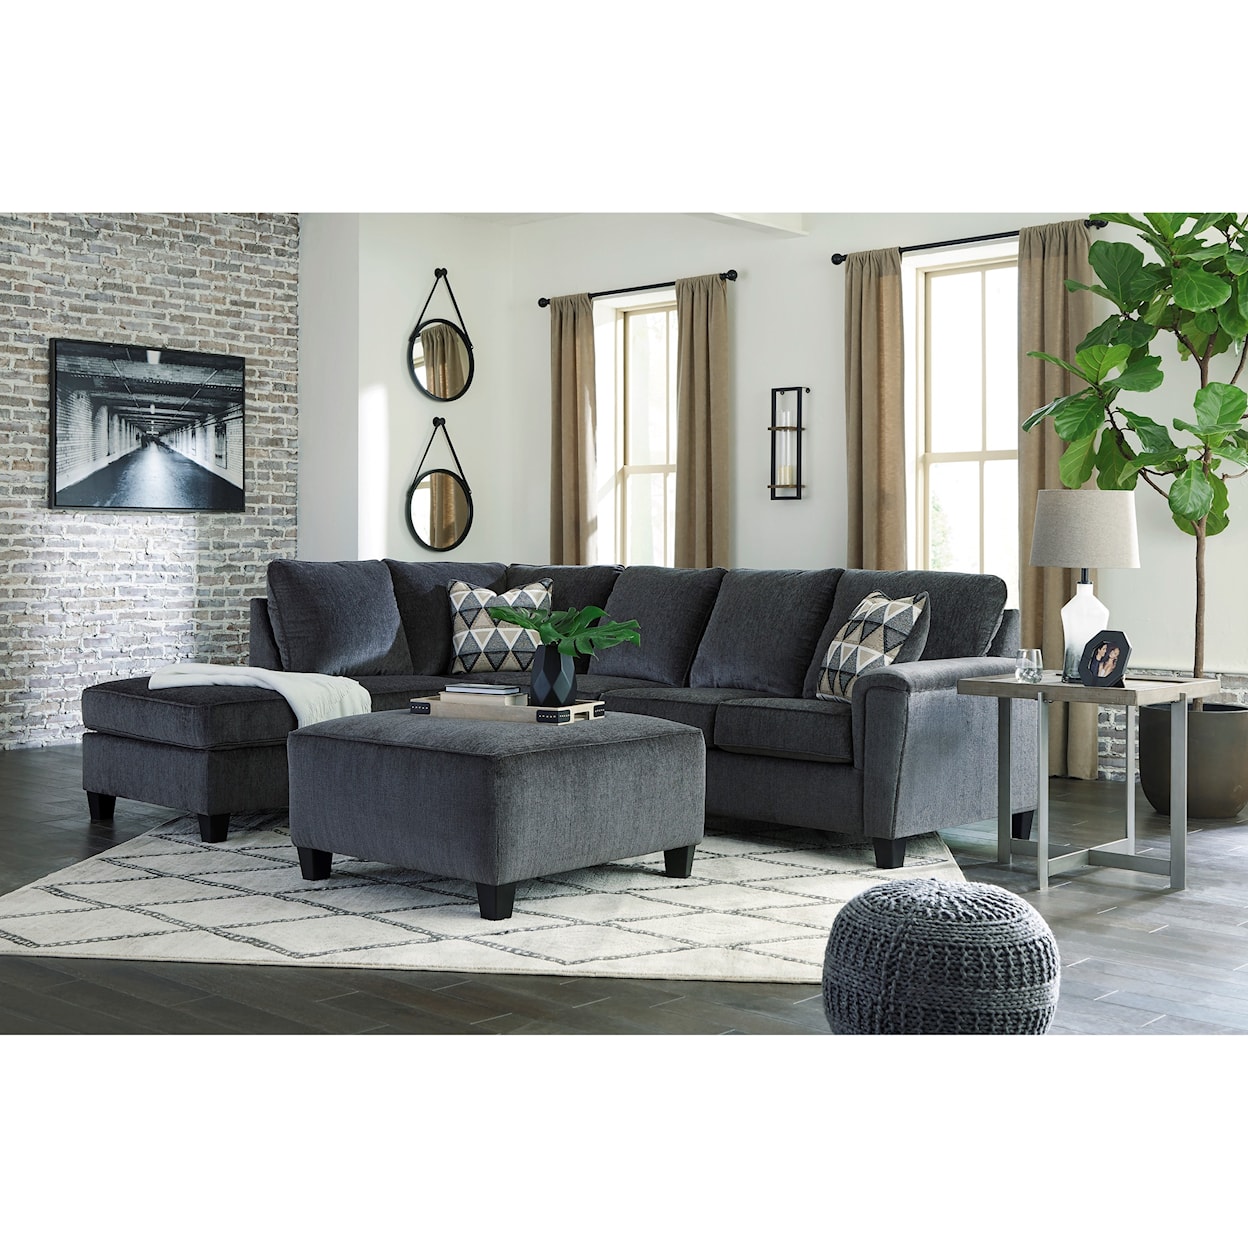 Ashley Furniture Signature Design Abinger Living Room Group